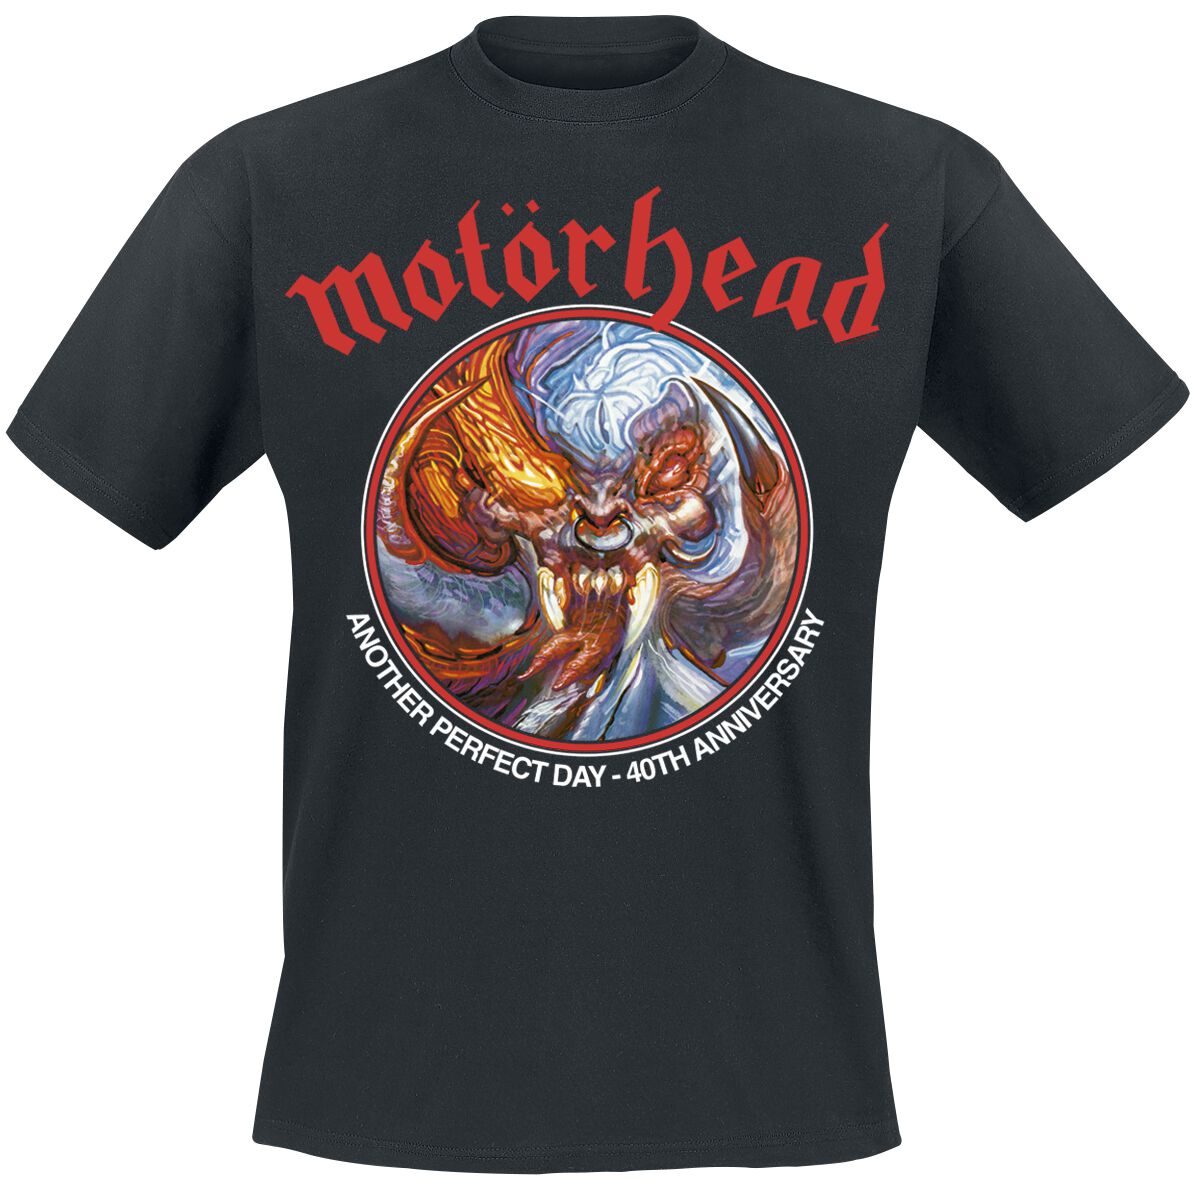 Motörhead Another Perfect Day Anniversary T-Shirt schwarz in XXL